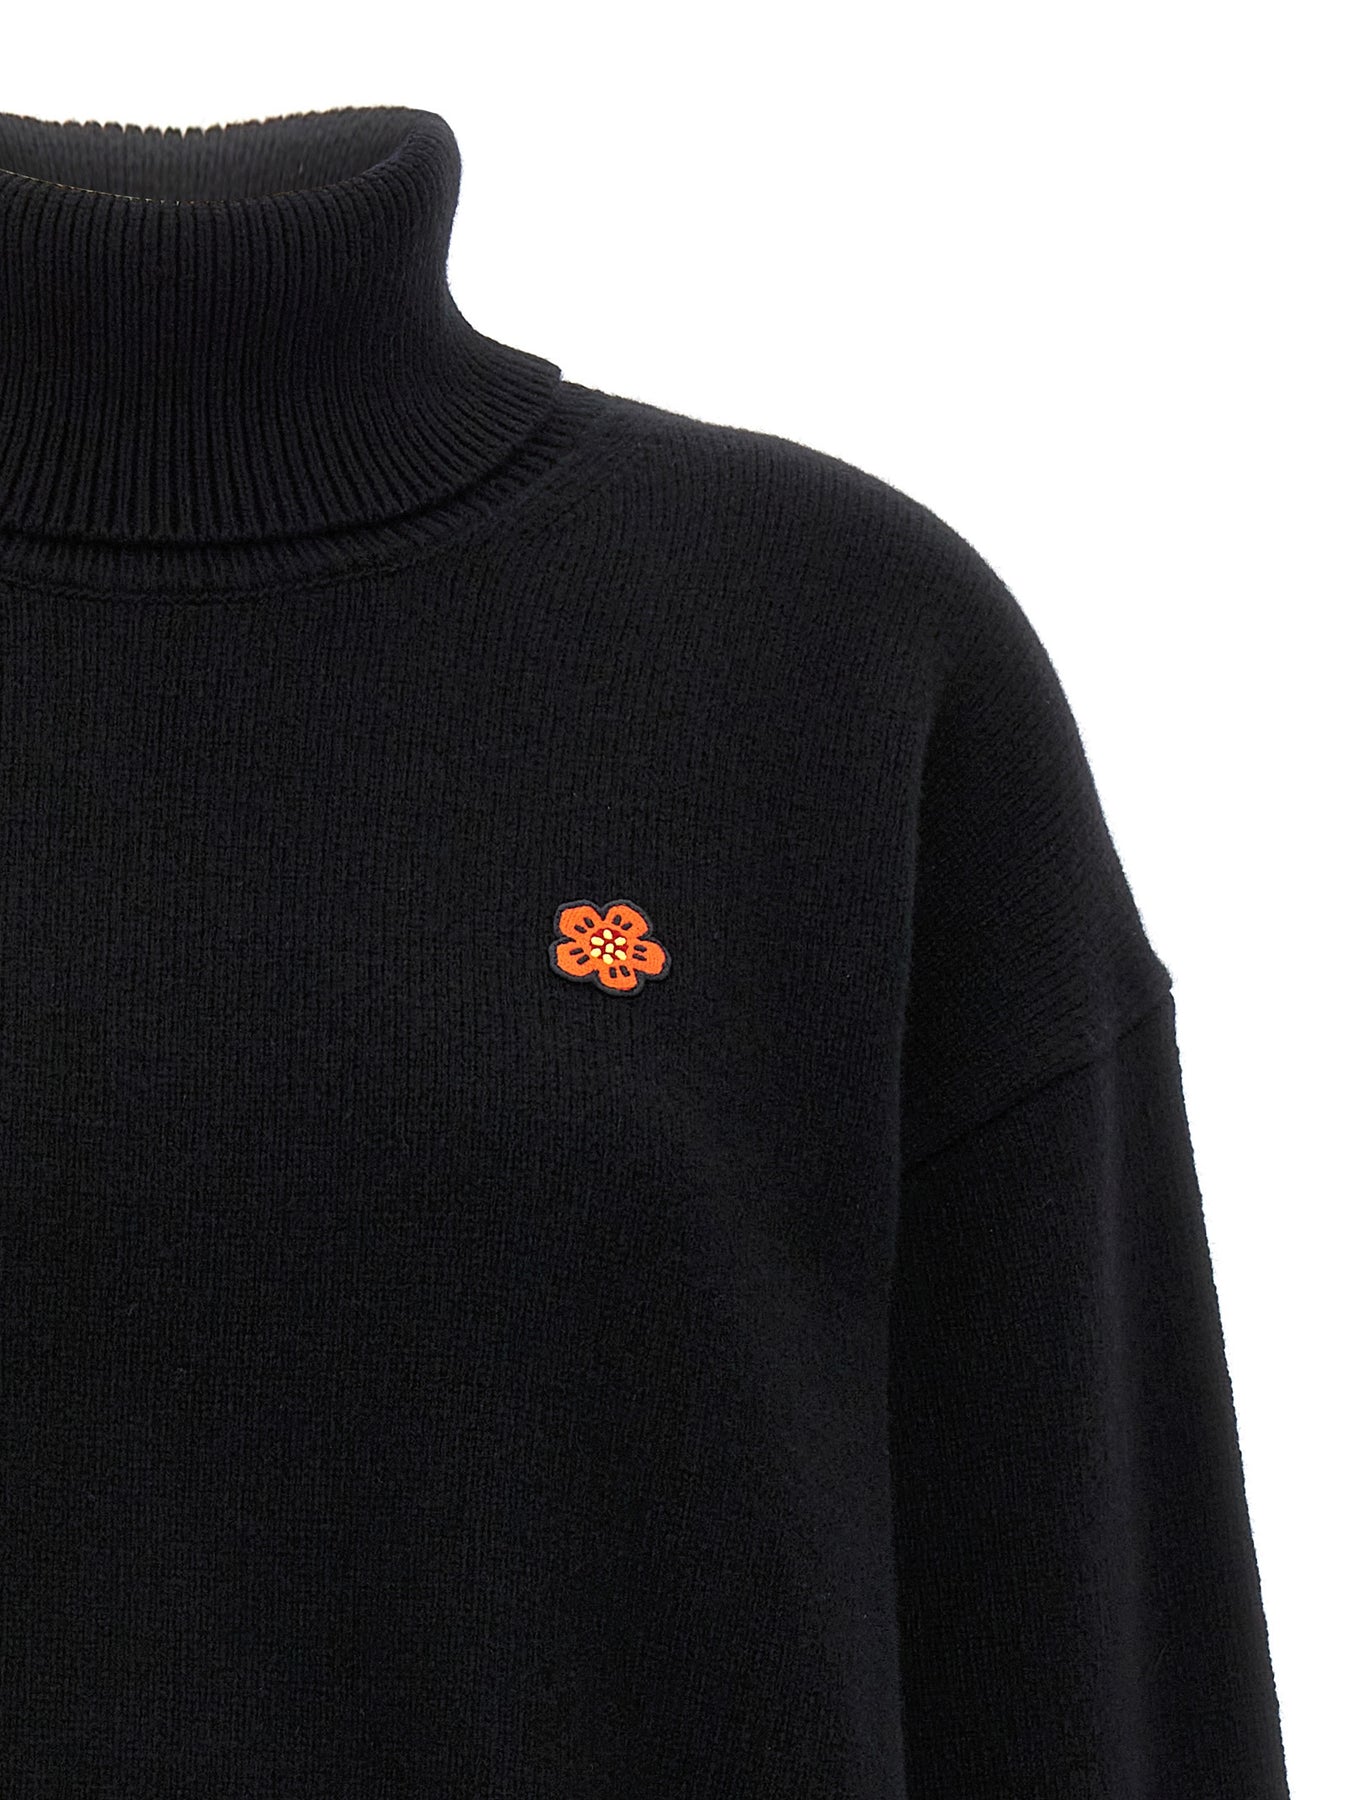 Shop Kenzo Crest Logo Sweater, Cardigans